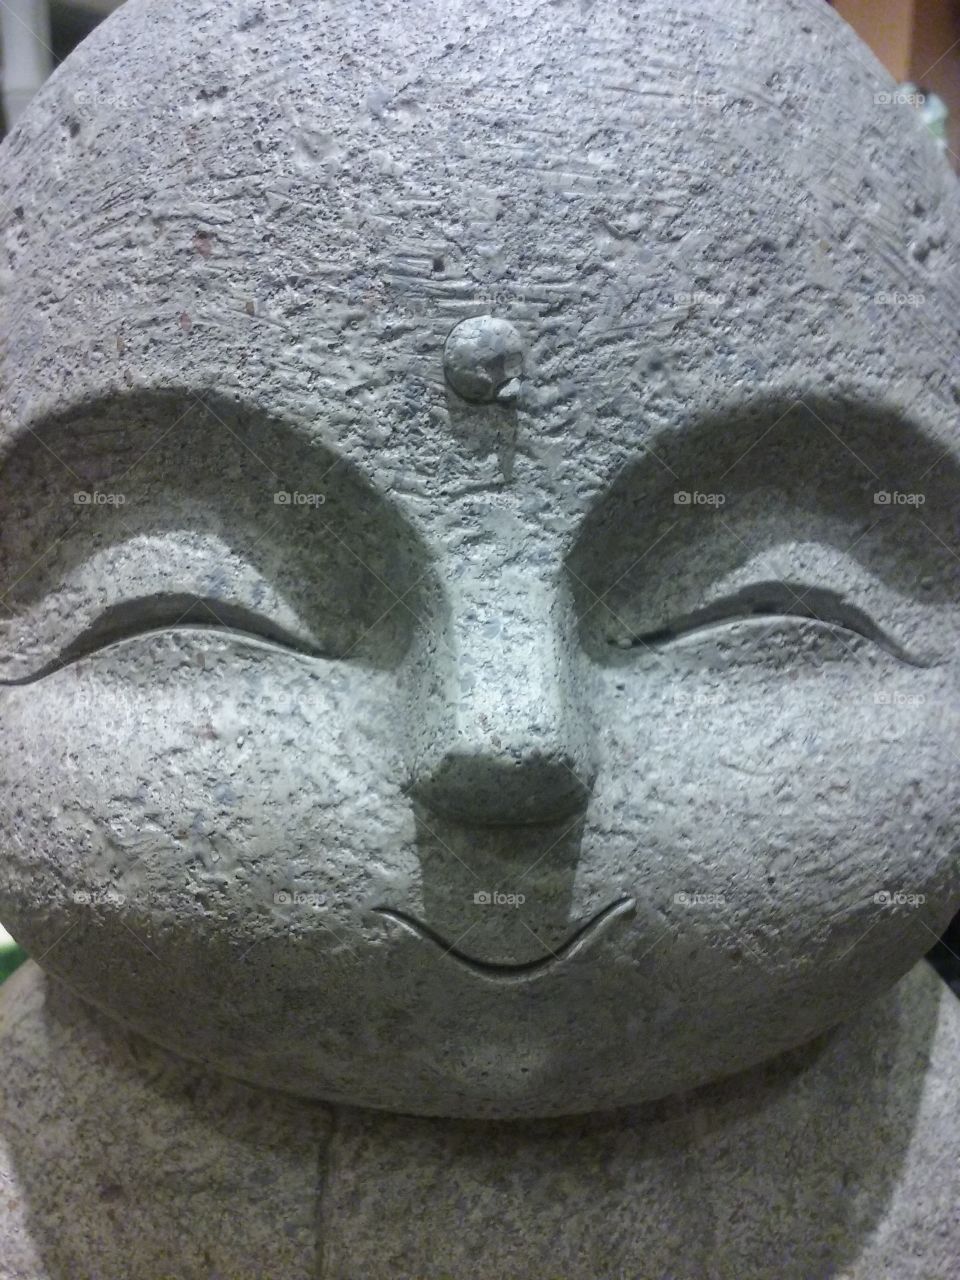 Happy Buddah